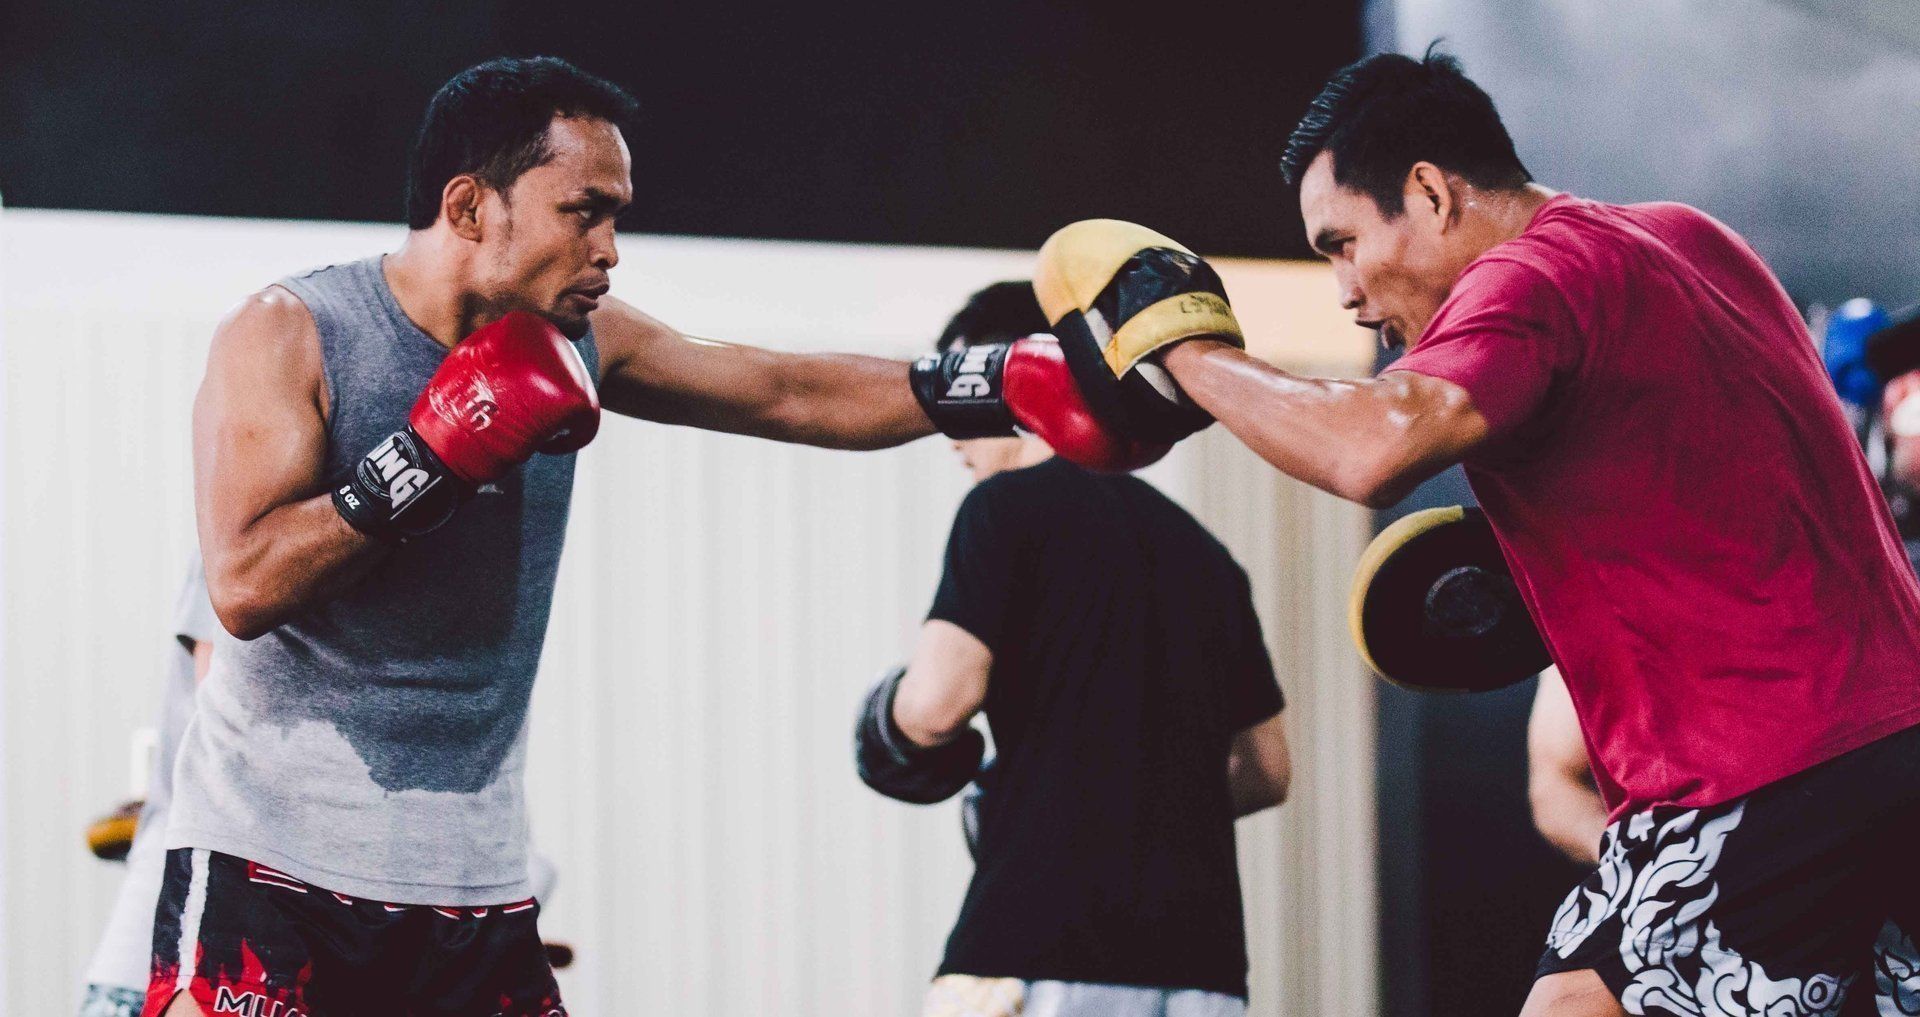 Punching Mitts Kickboxing Muay Thai MMA Boxing Mitts Training Focus Punch Mit...